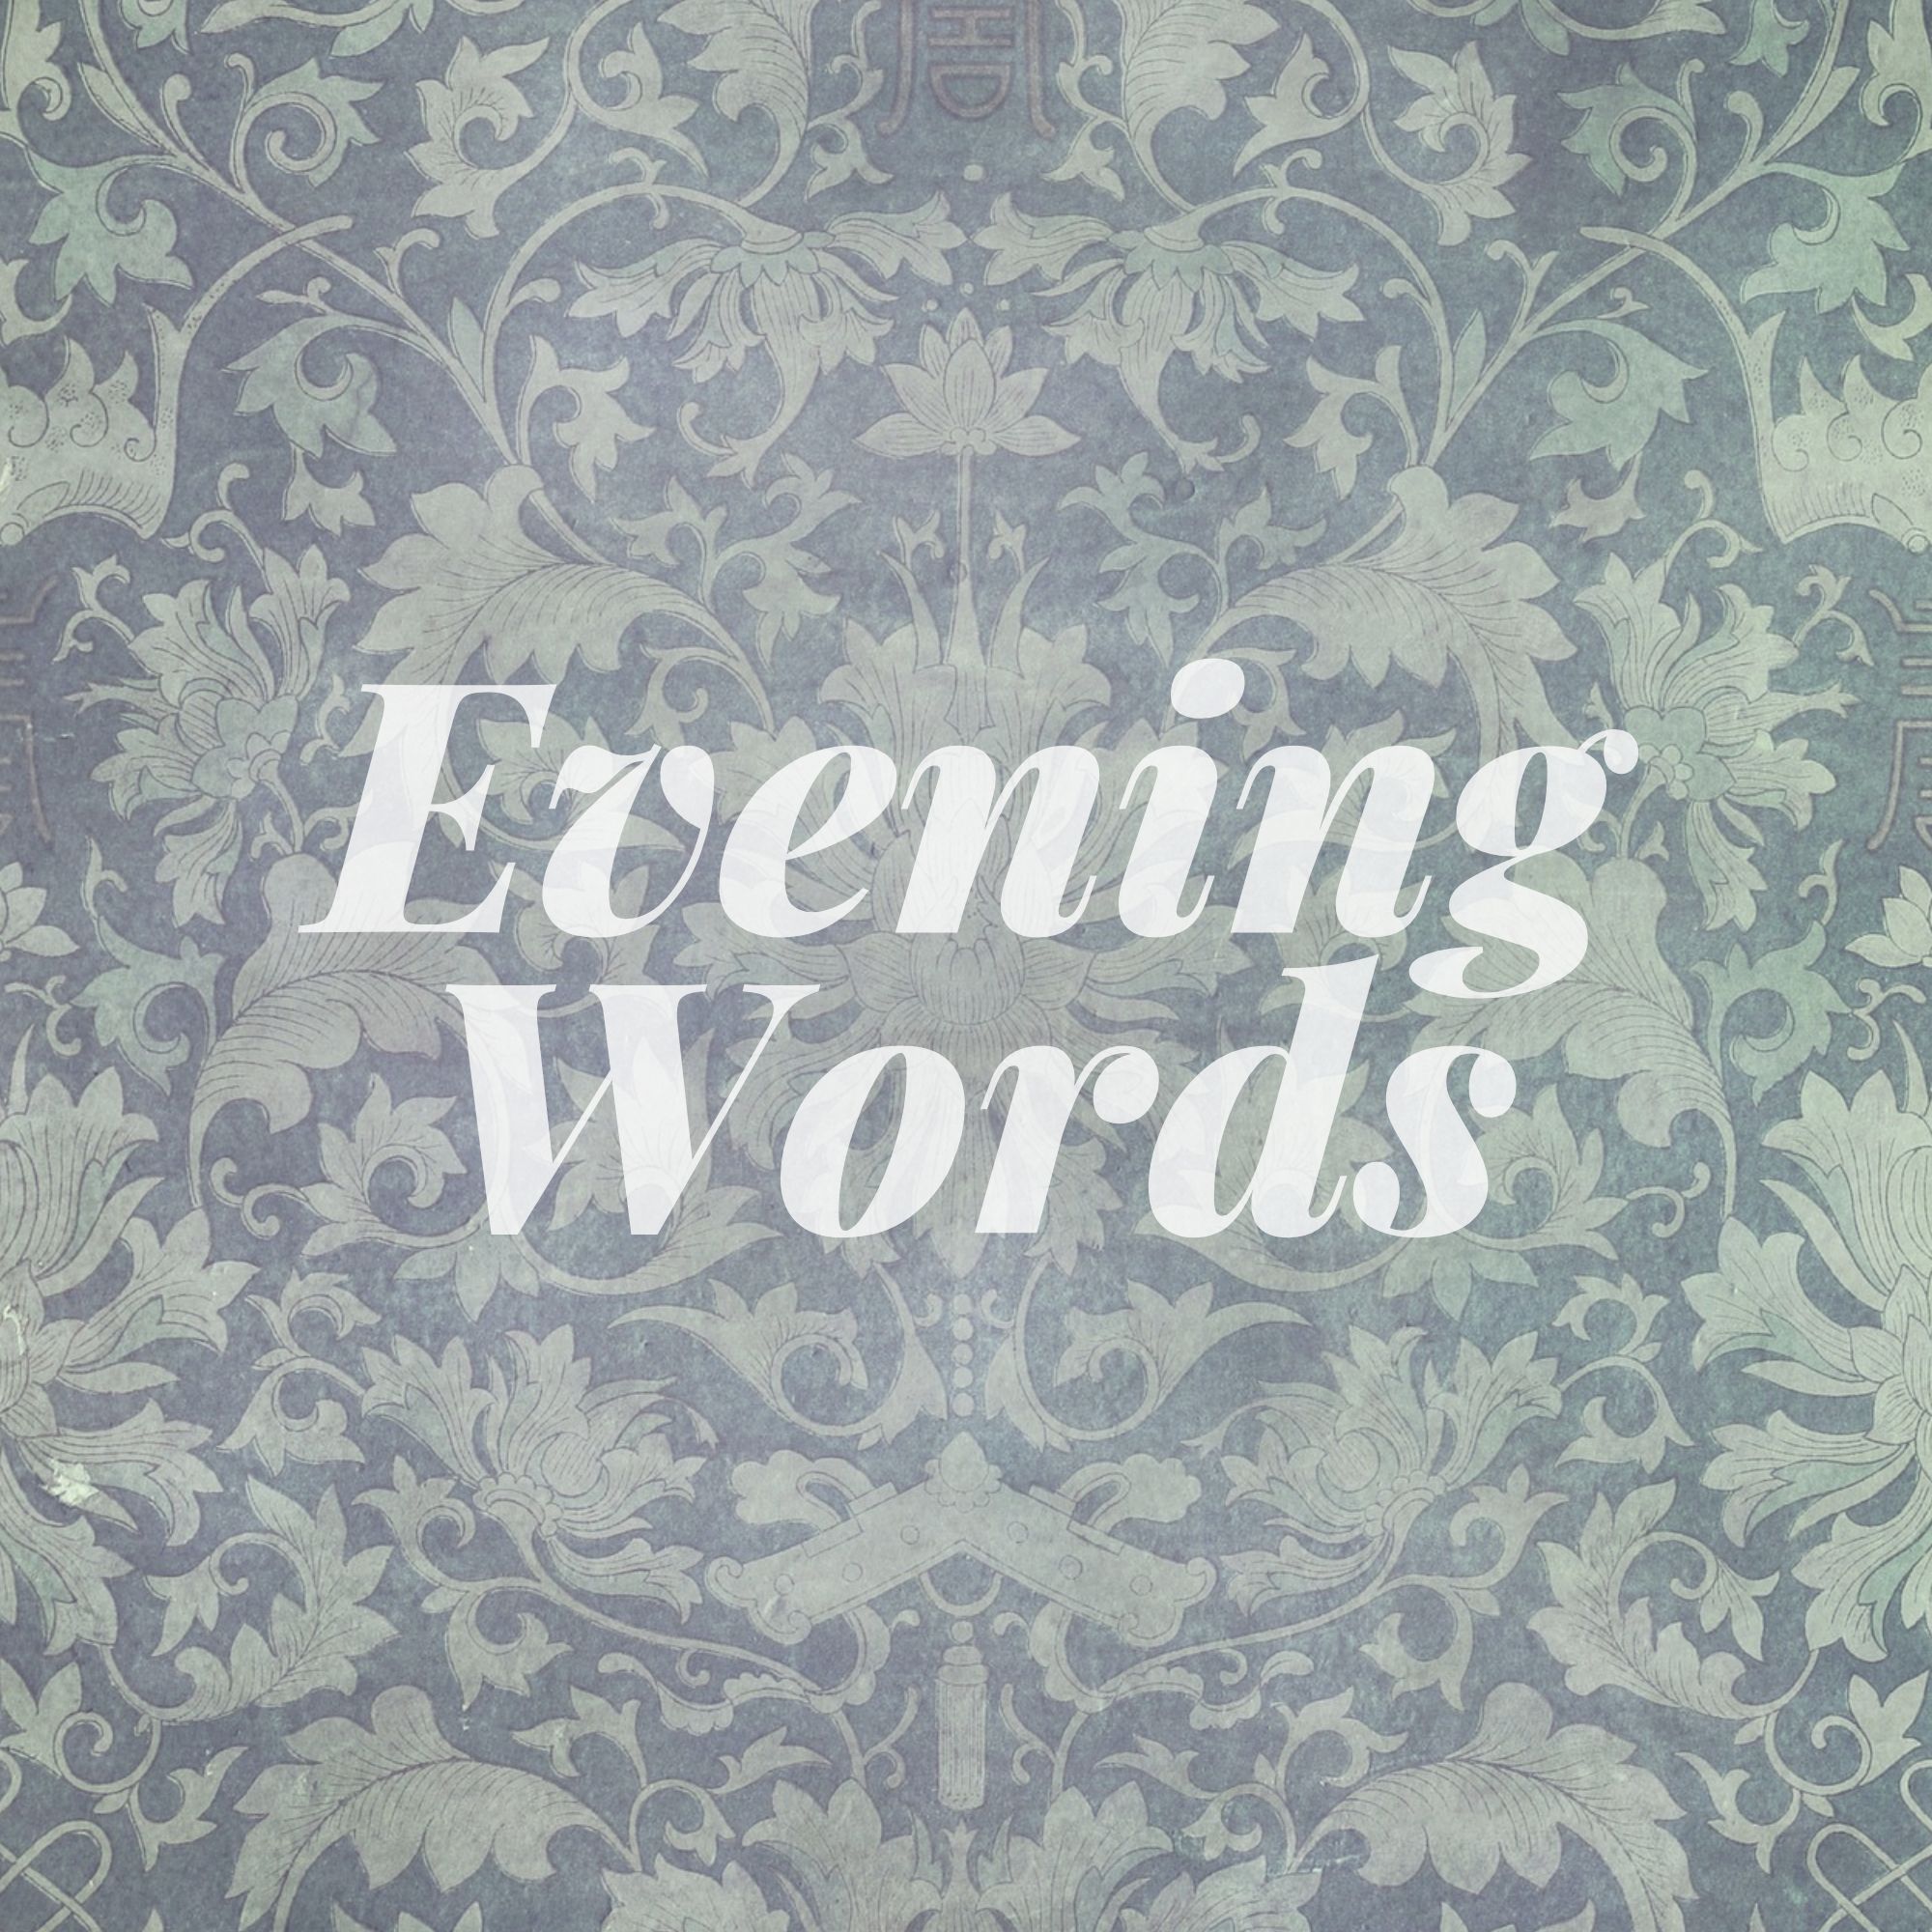 Evening Words #001